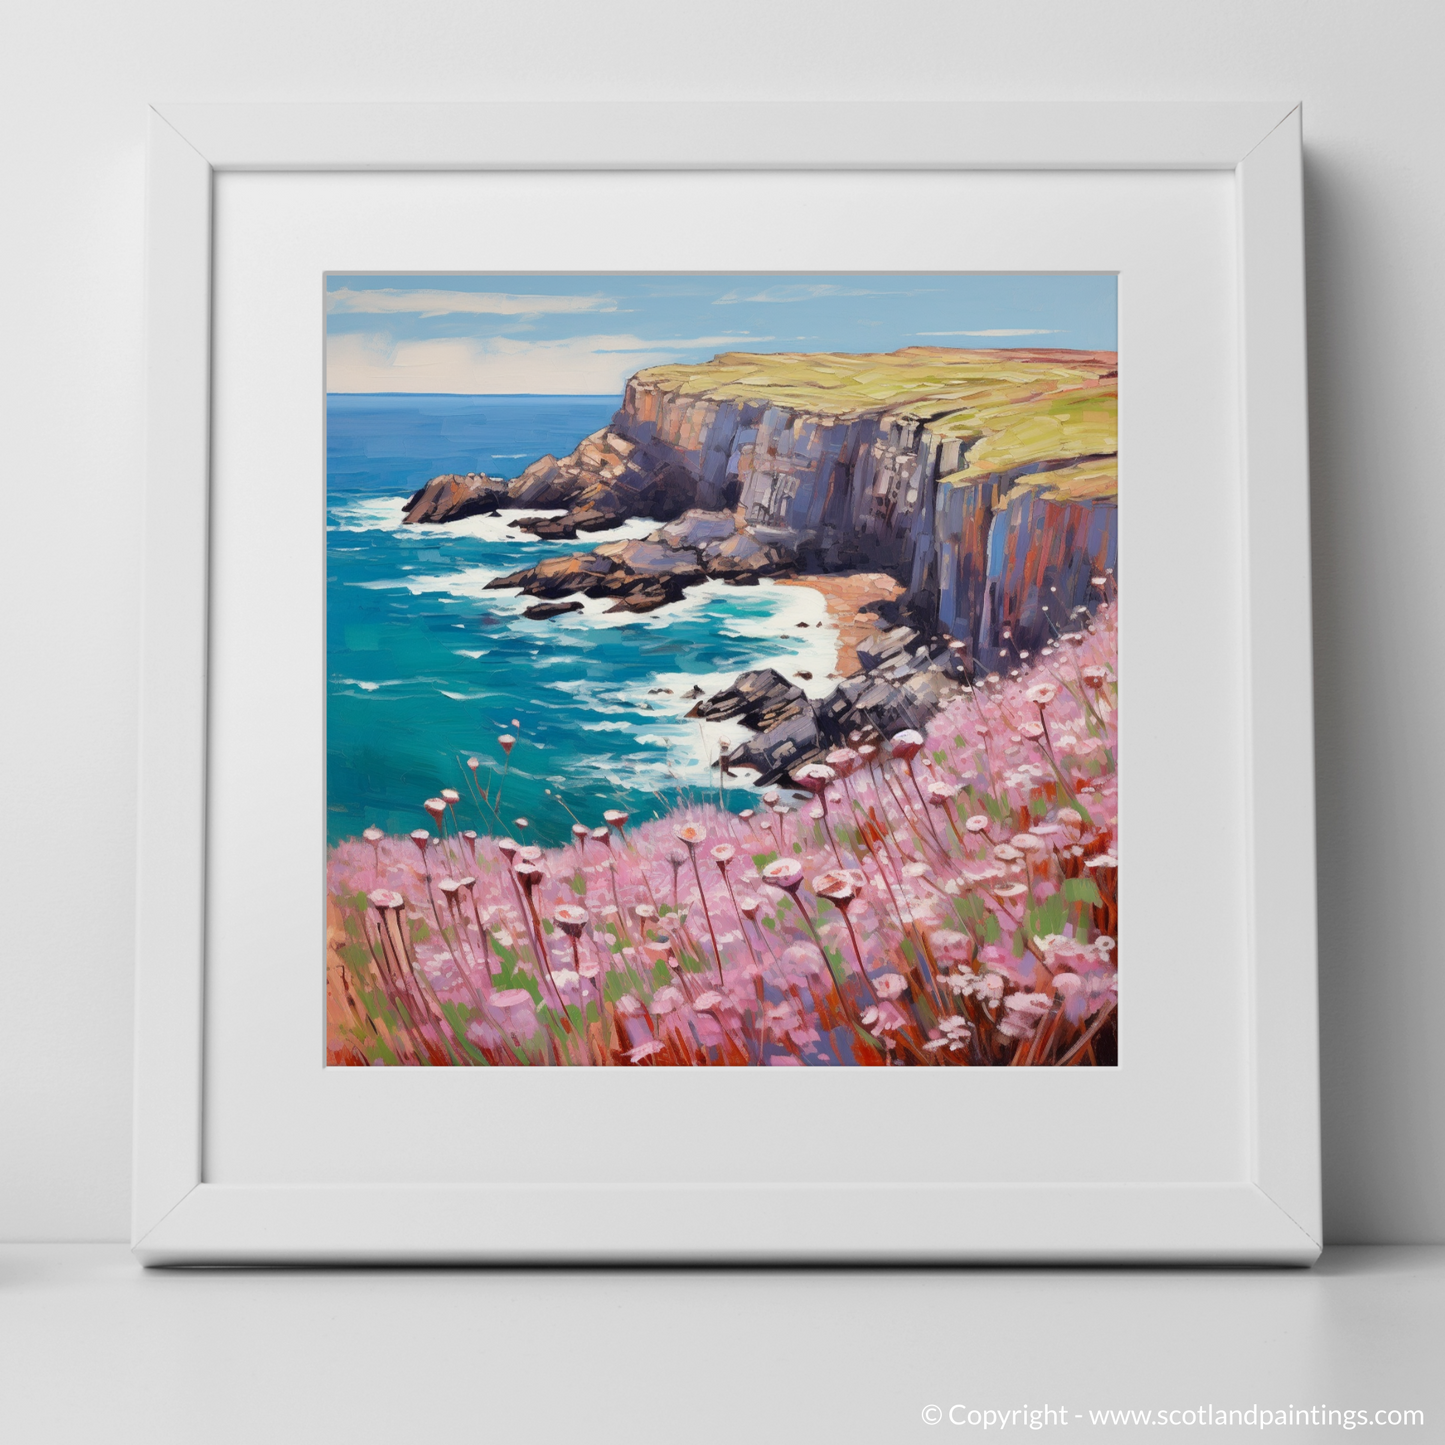 Wild Blooms on St Abbs Cliffs: A Scottish Coastal Color Field Masterpiece